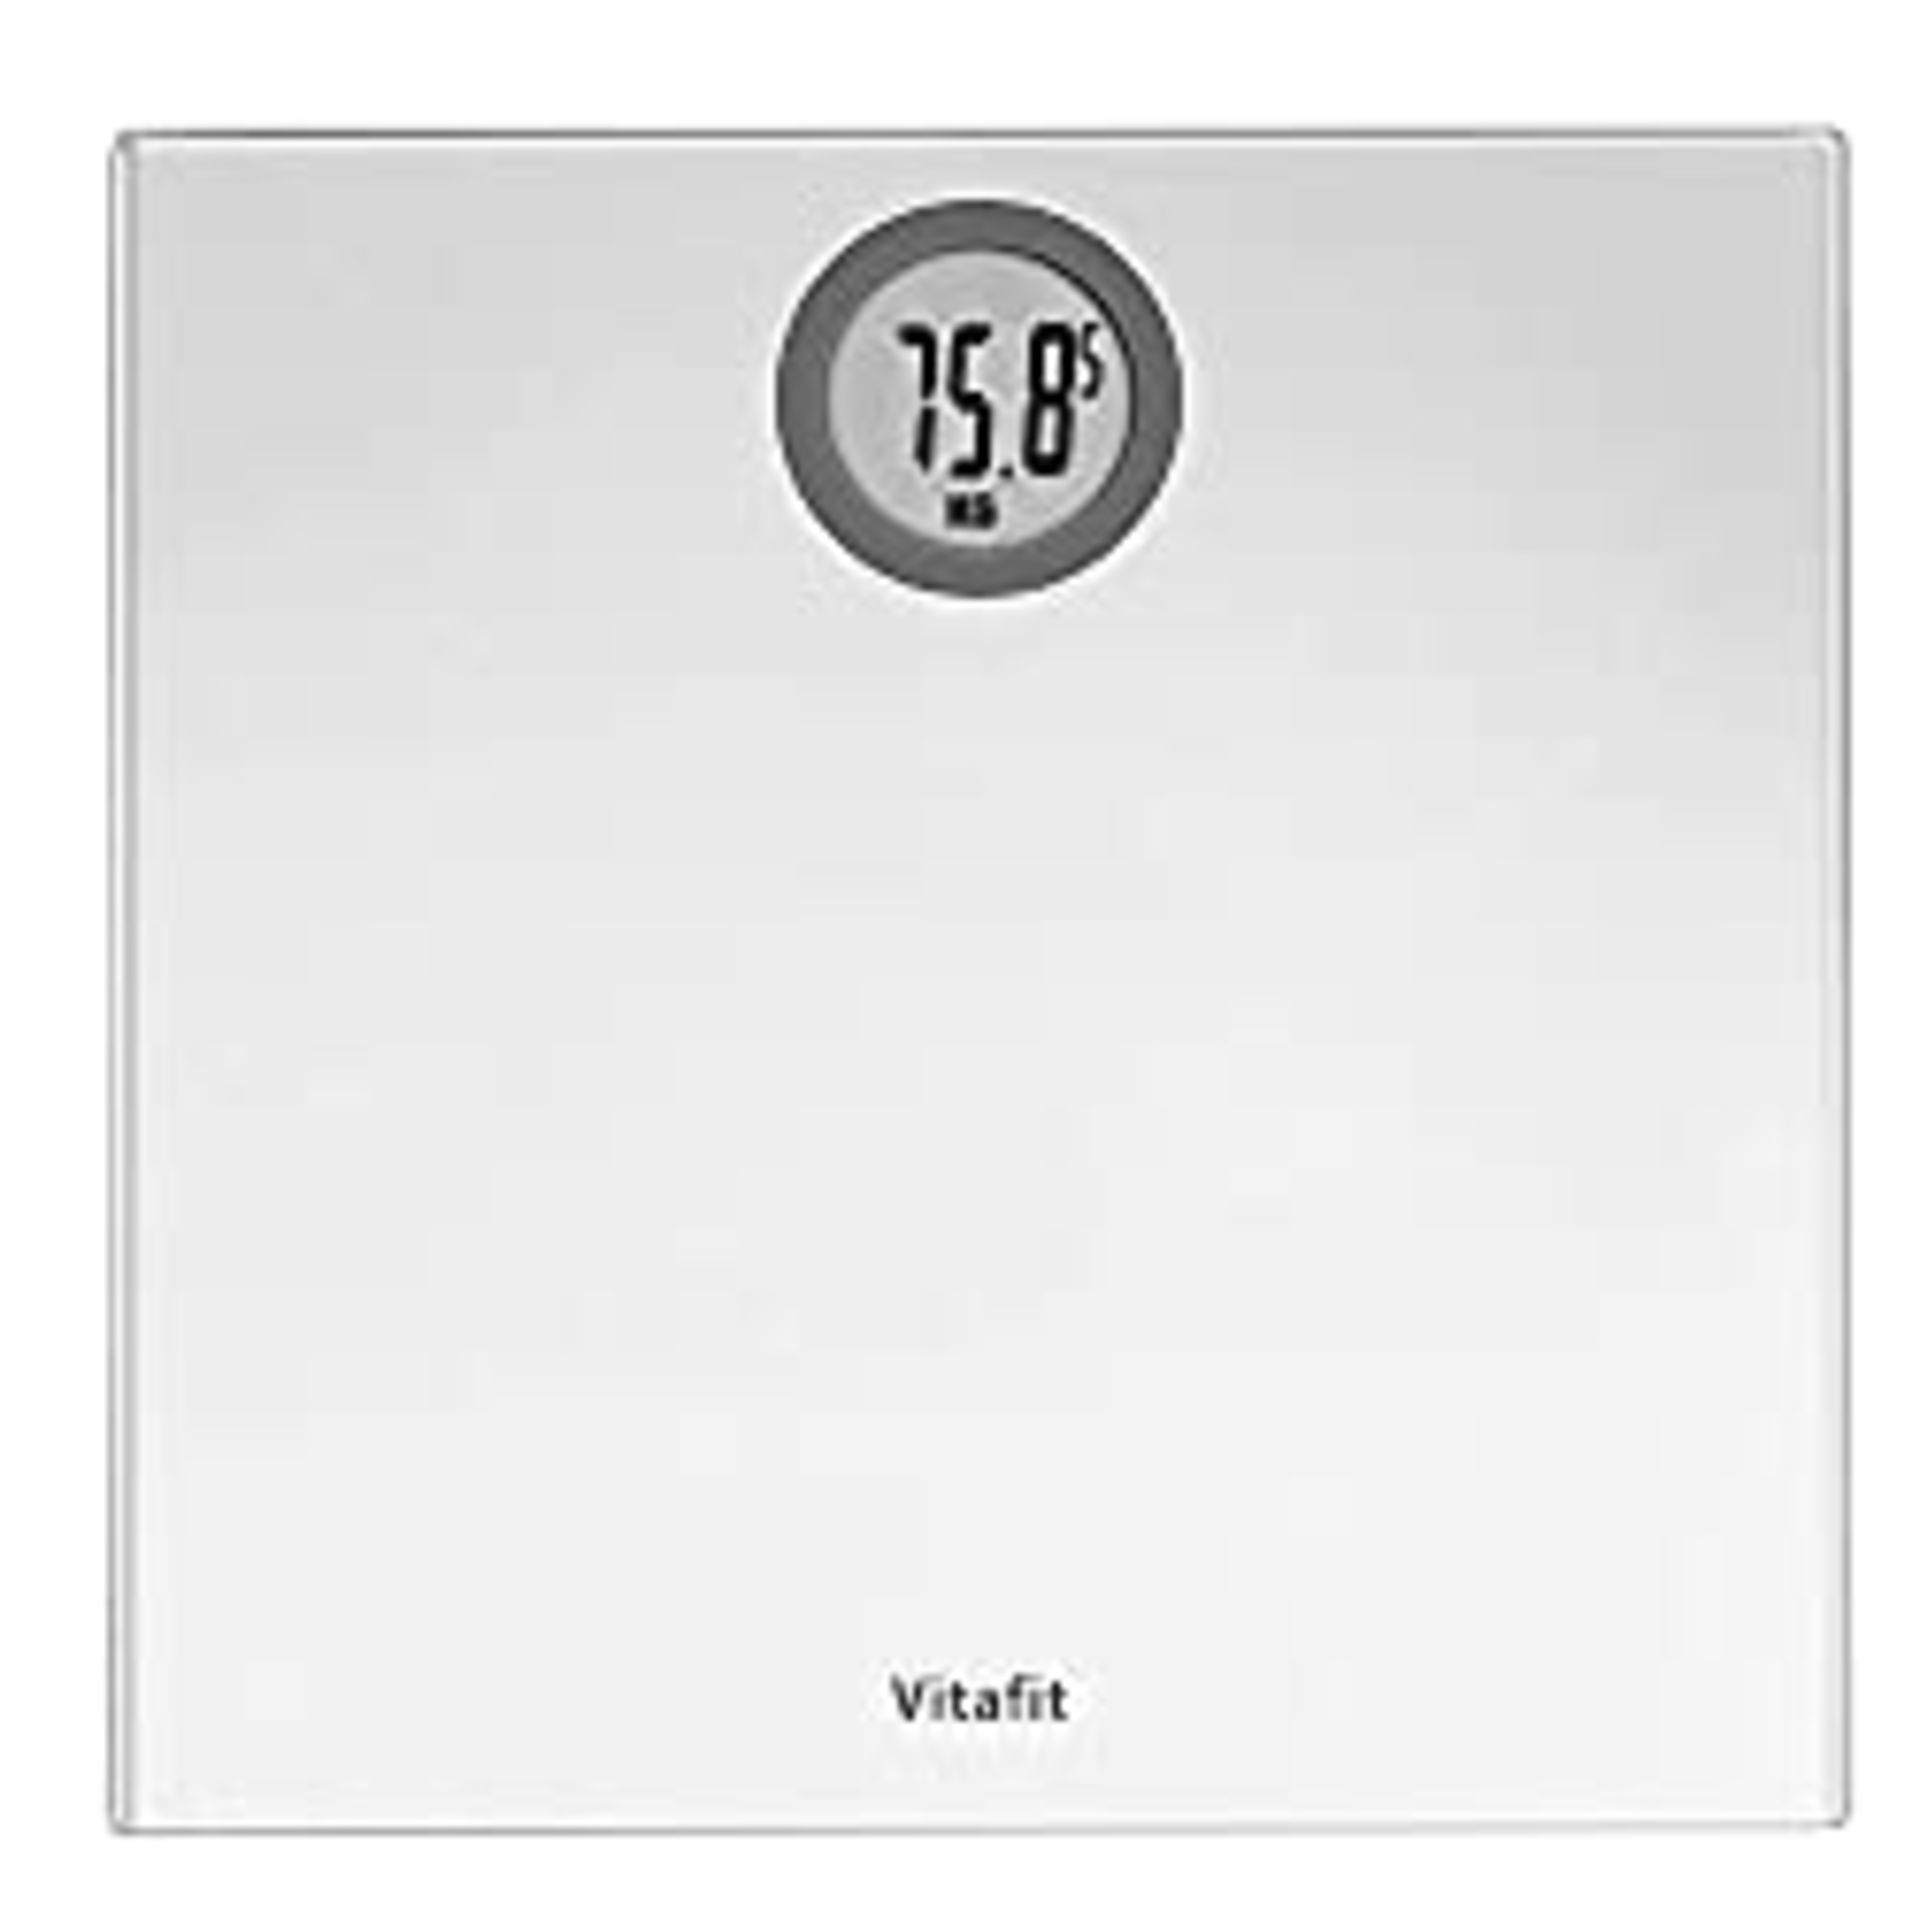 RRP £9.94 Vitafit Digital Bathroom Scales for Body Weight